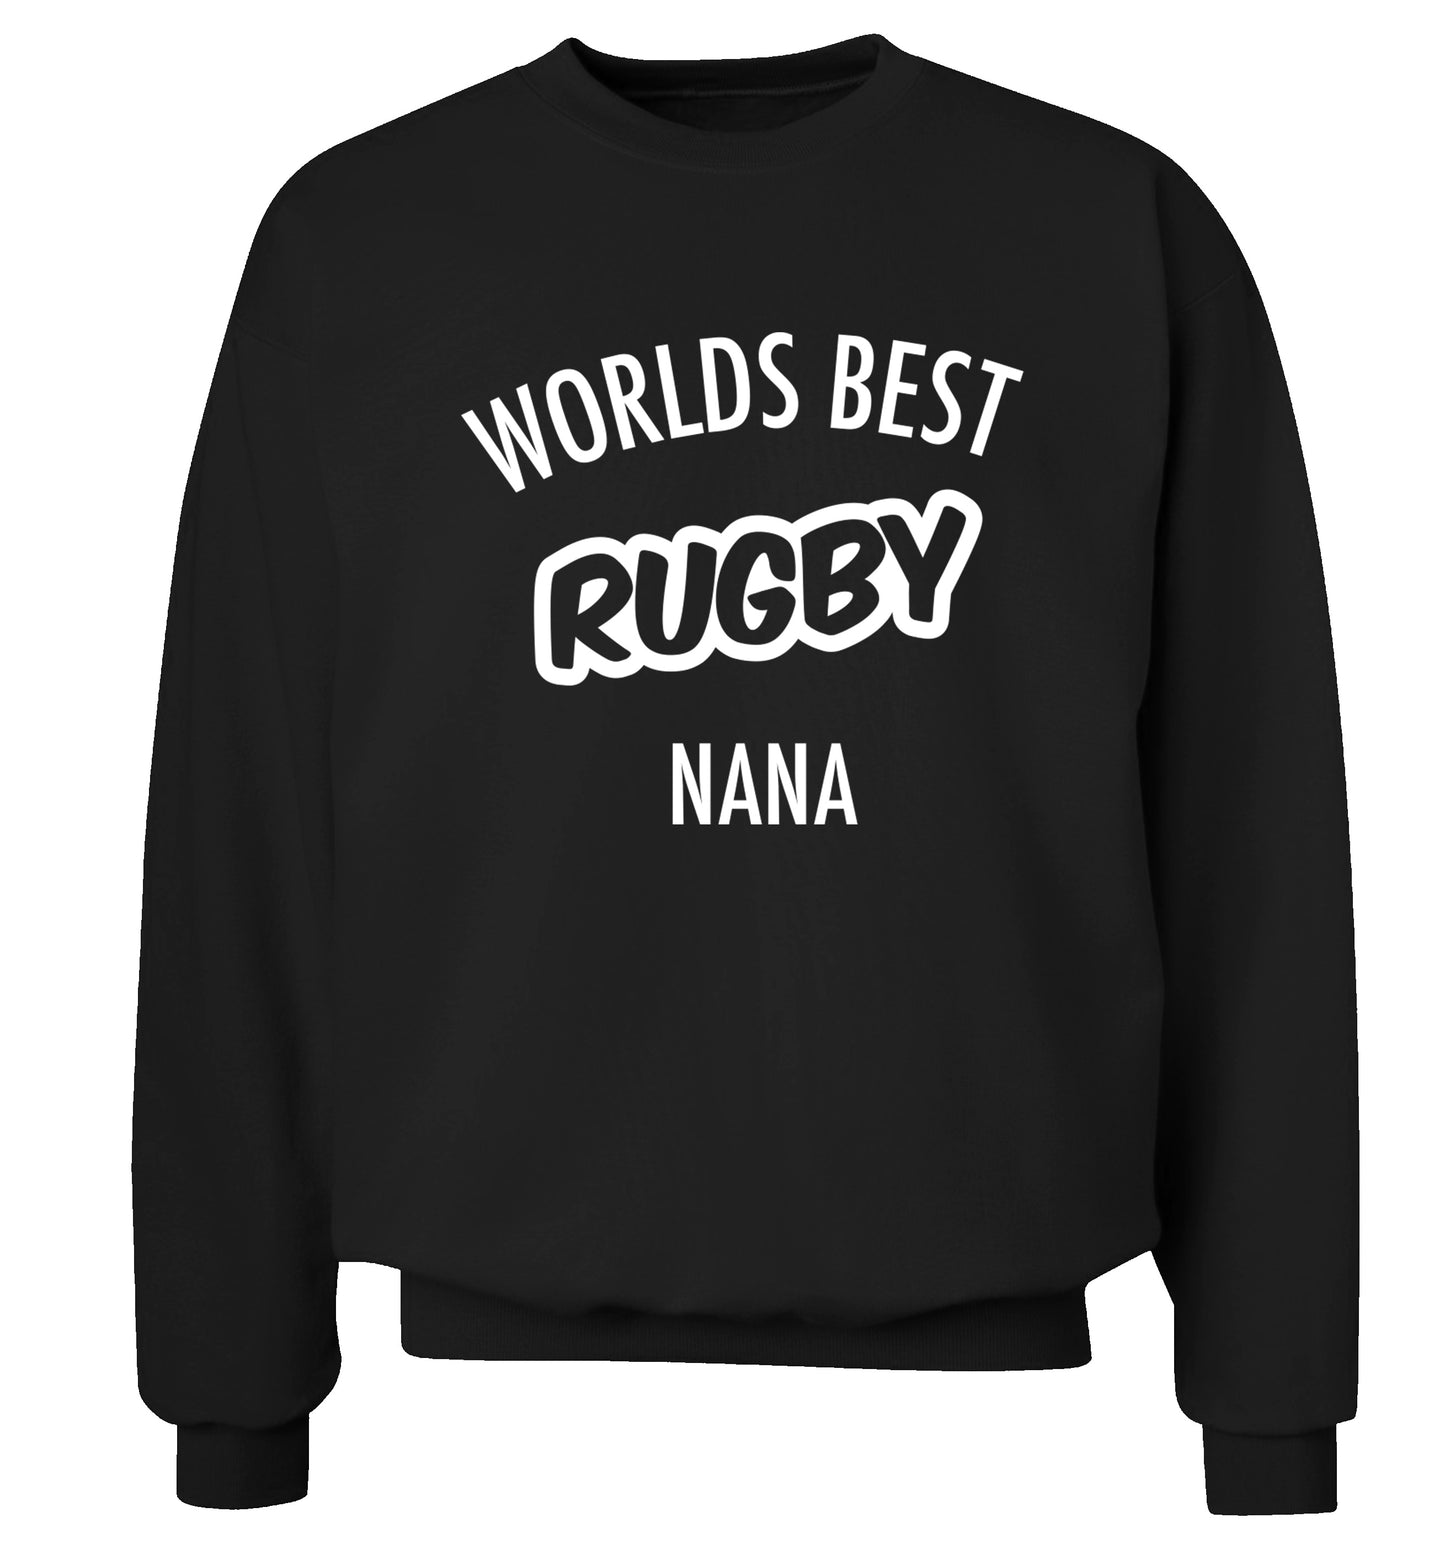 Worlds Best Rugby Grandma Adult's unisex black Sweater 2XL